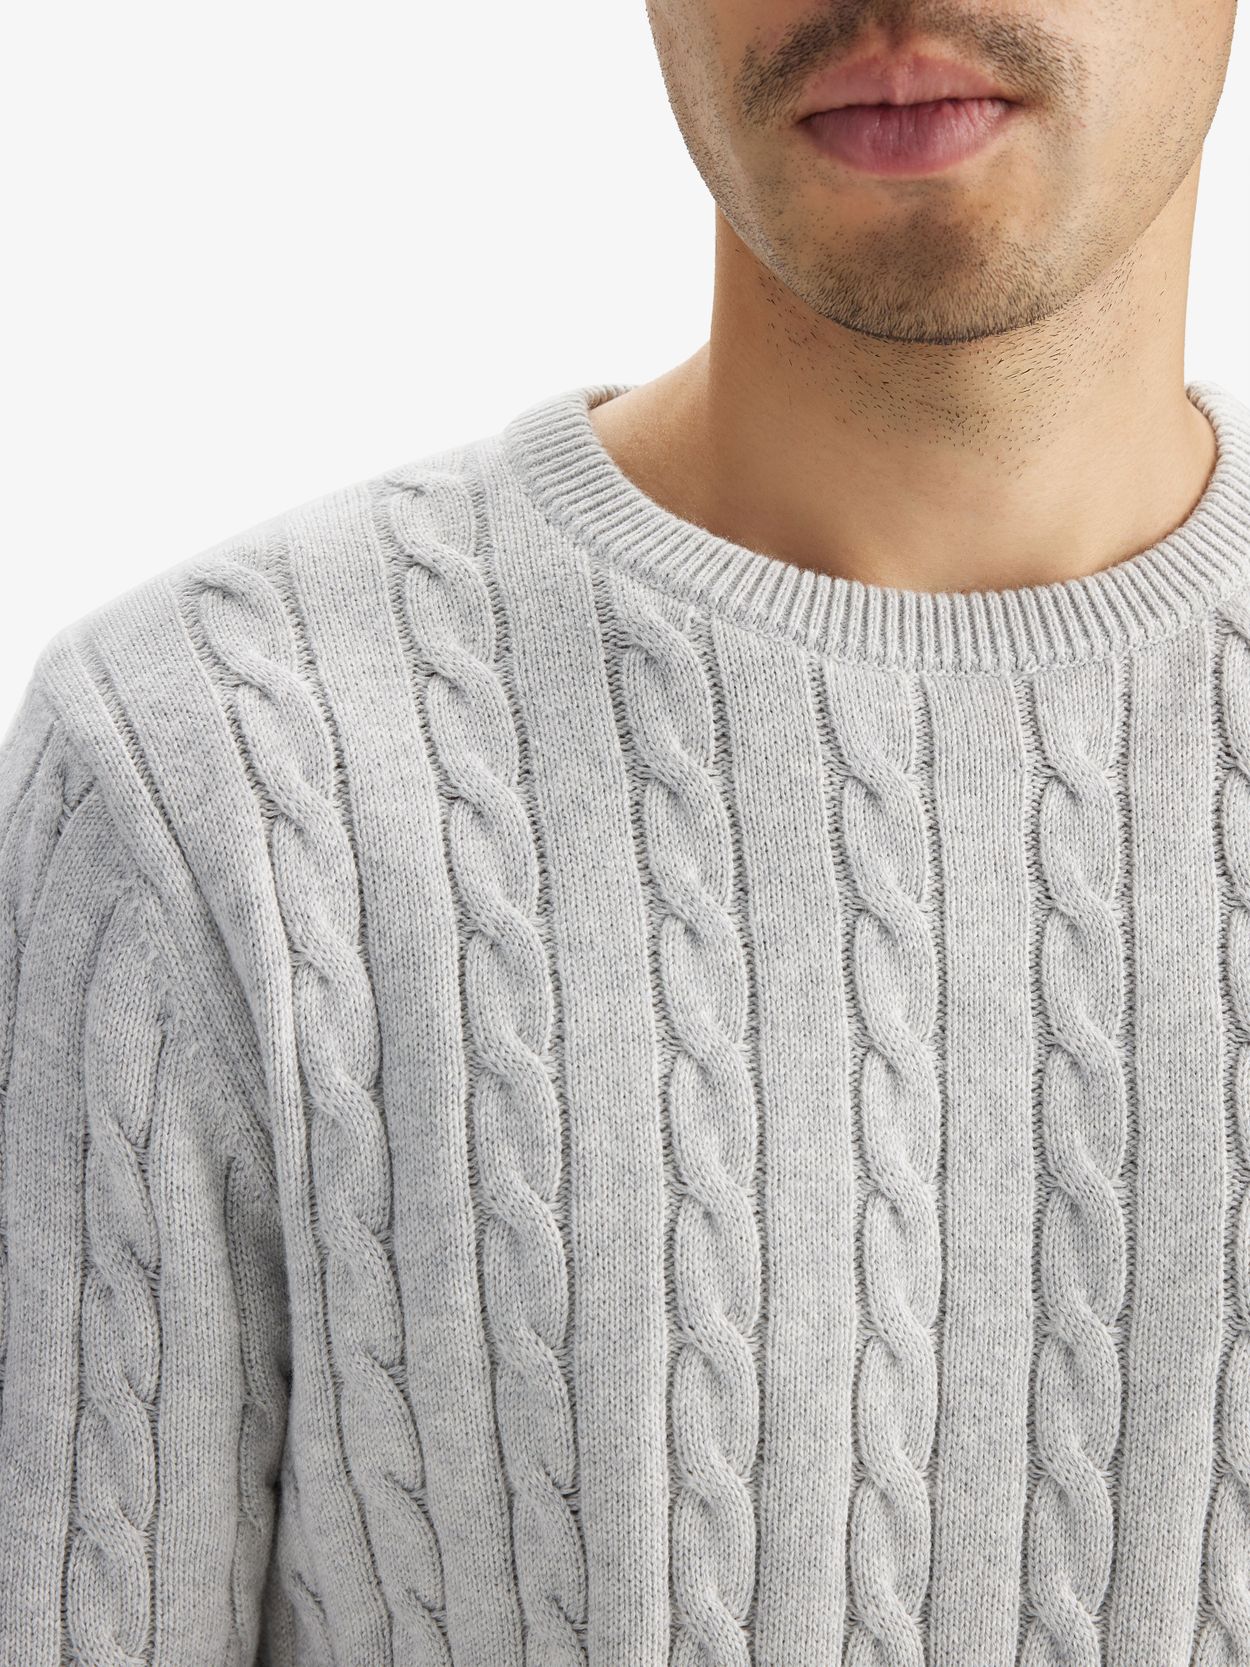 Men's Grey Cotton Crewneck Sweater